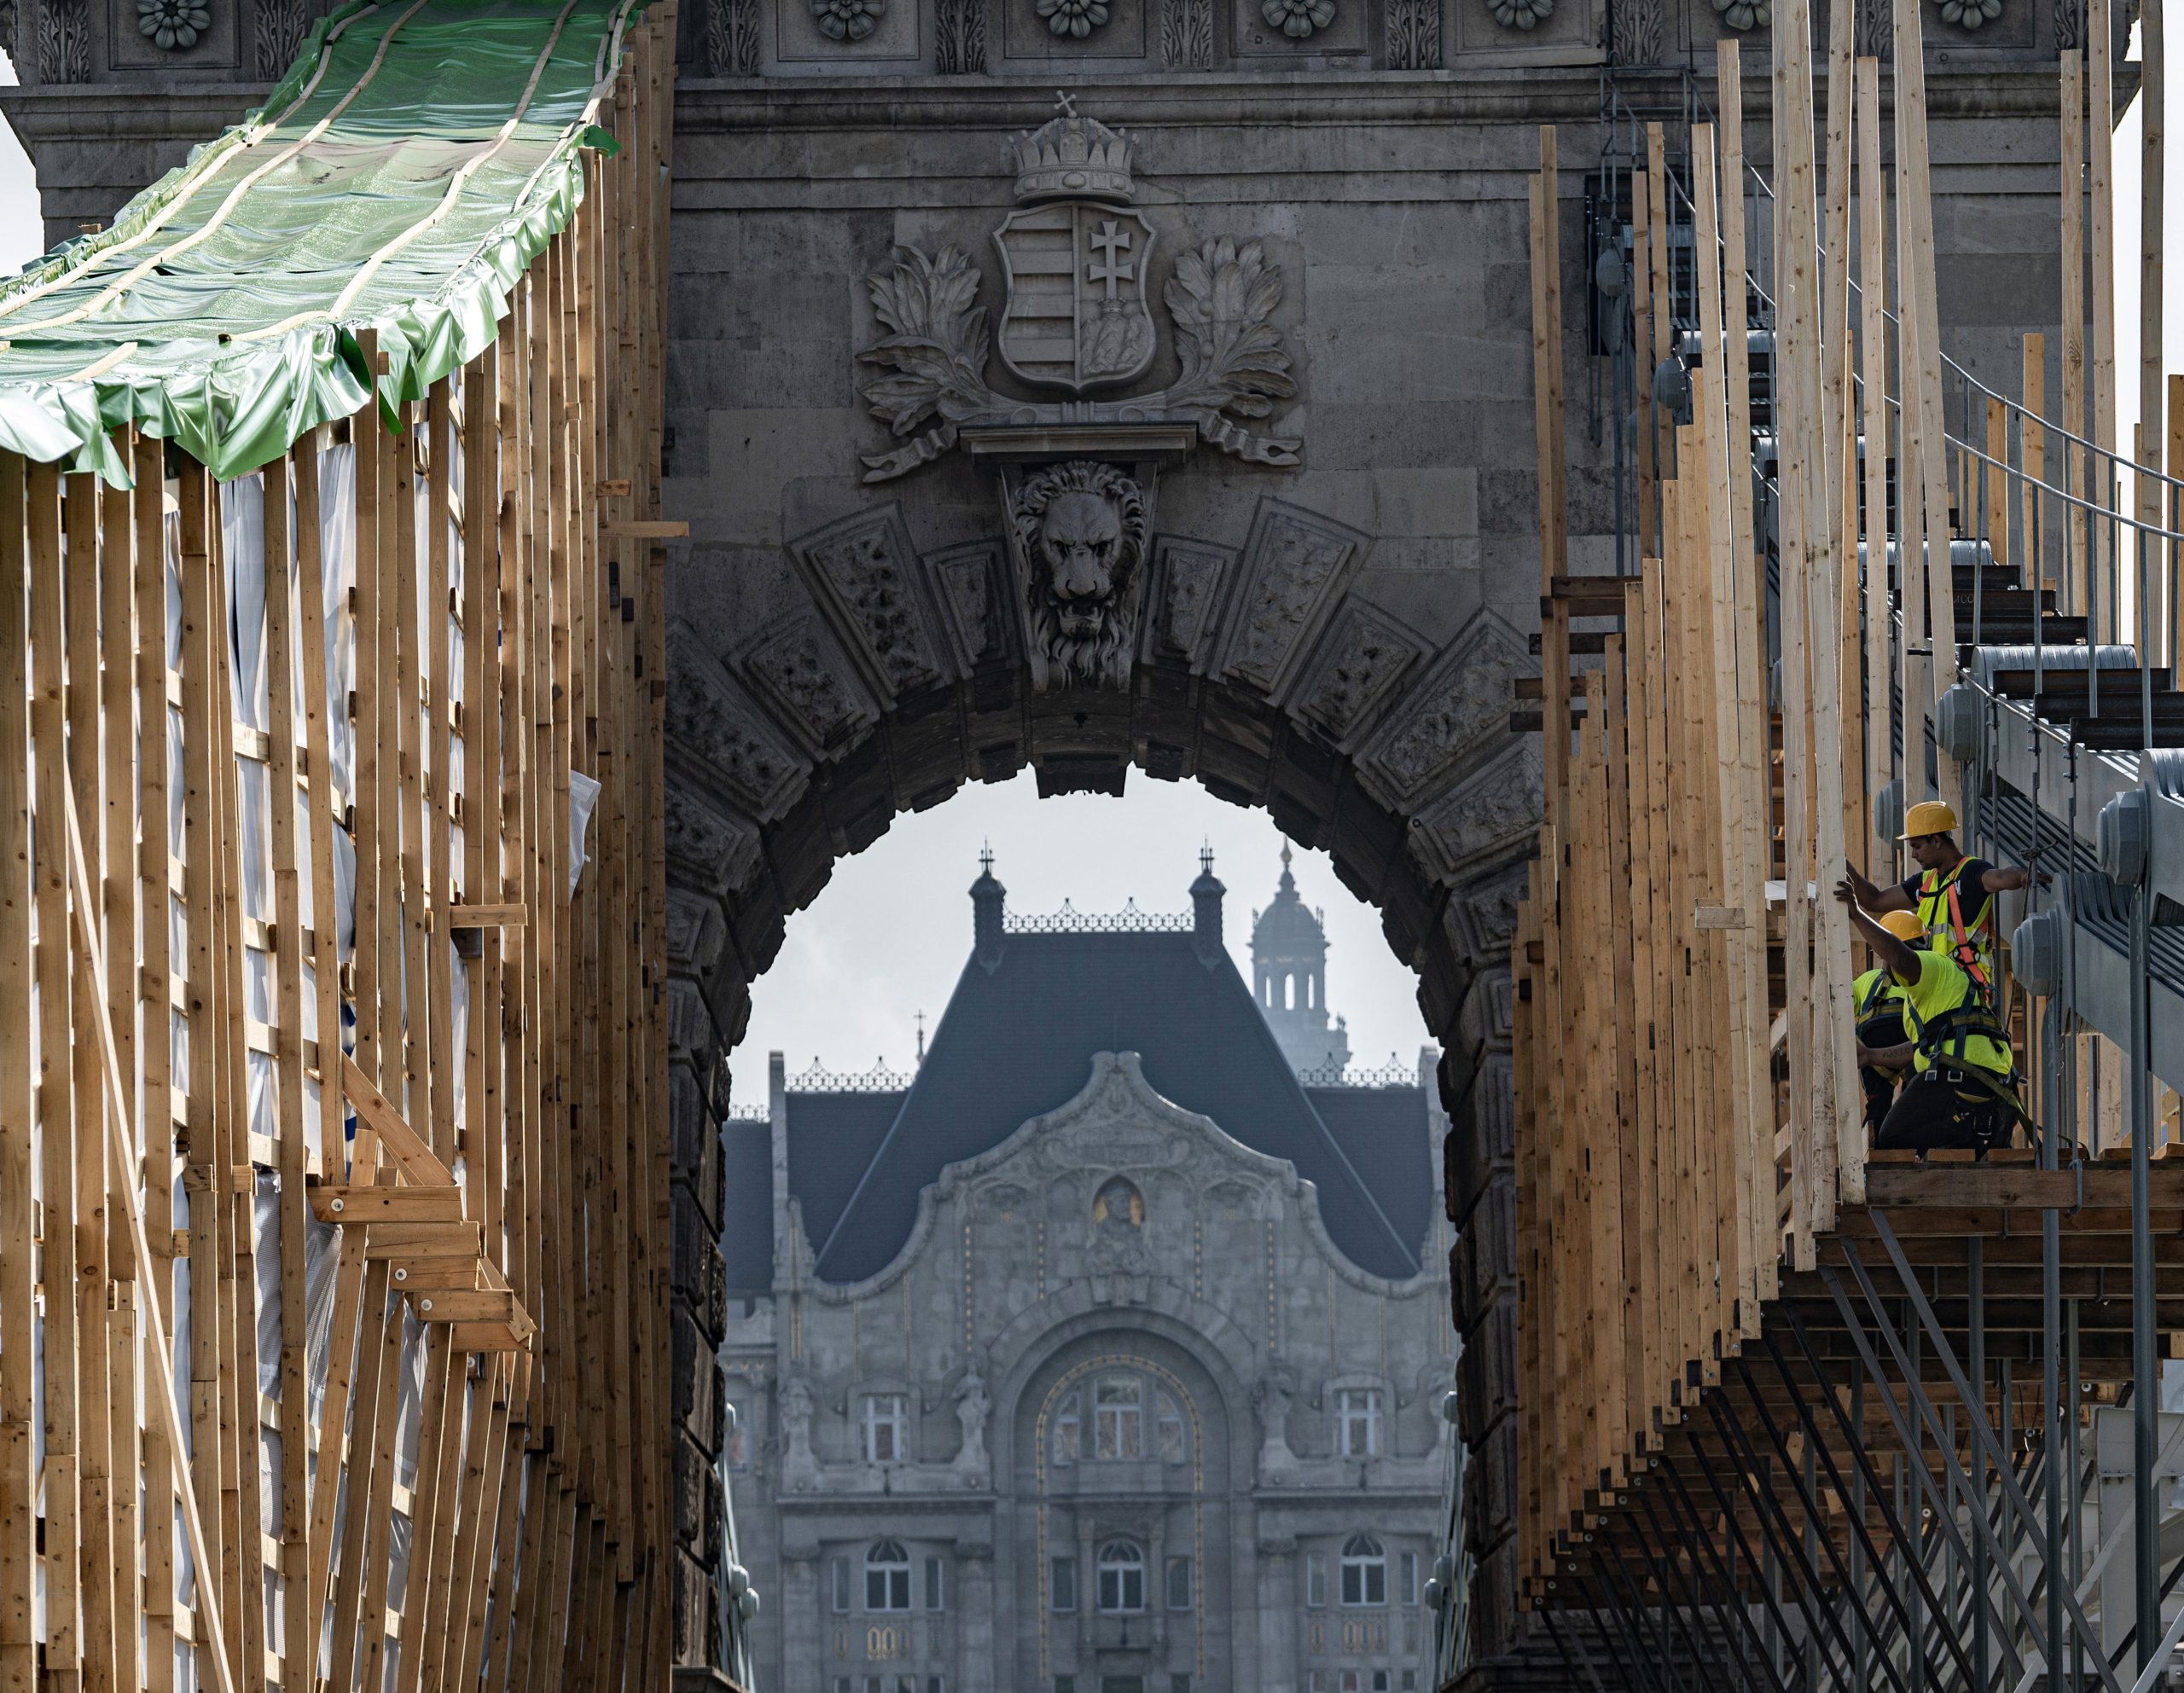 Hungary’s Chain Bridge Renovation: Restoring a Monument - Photos!